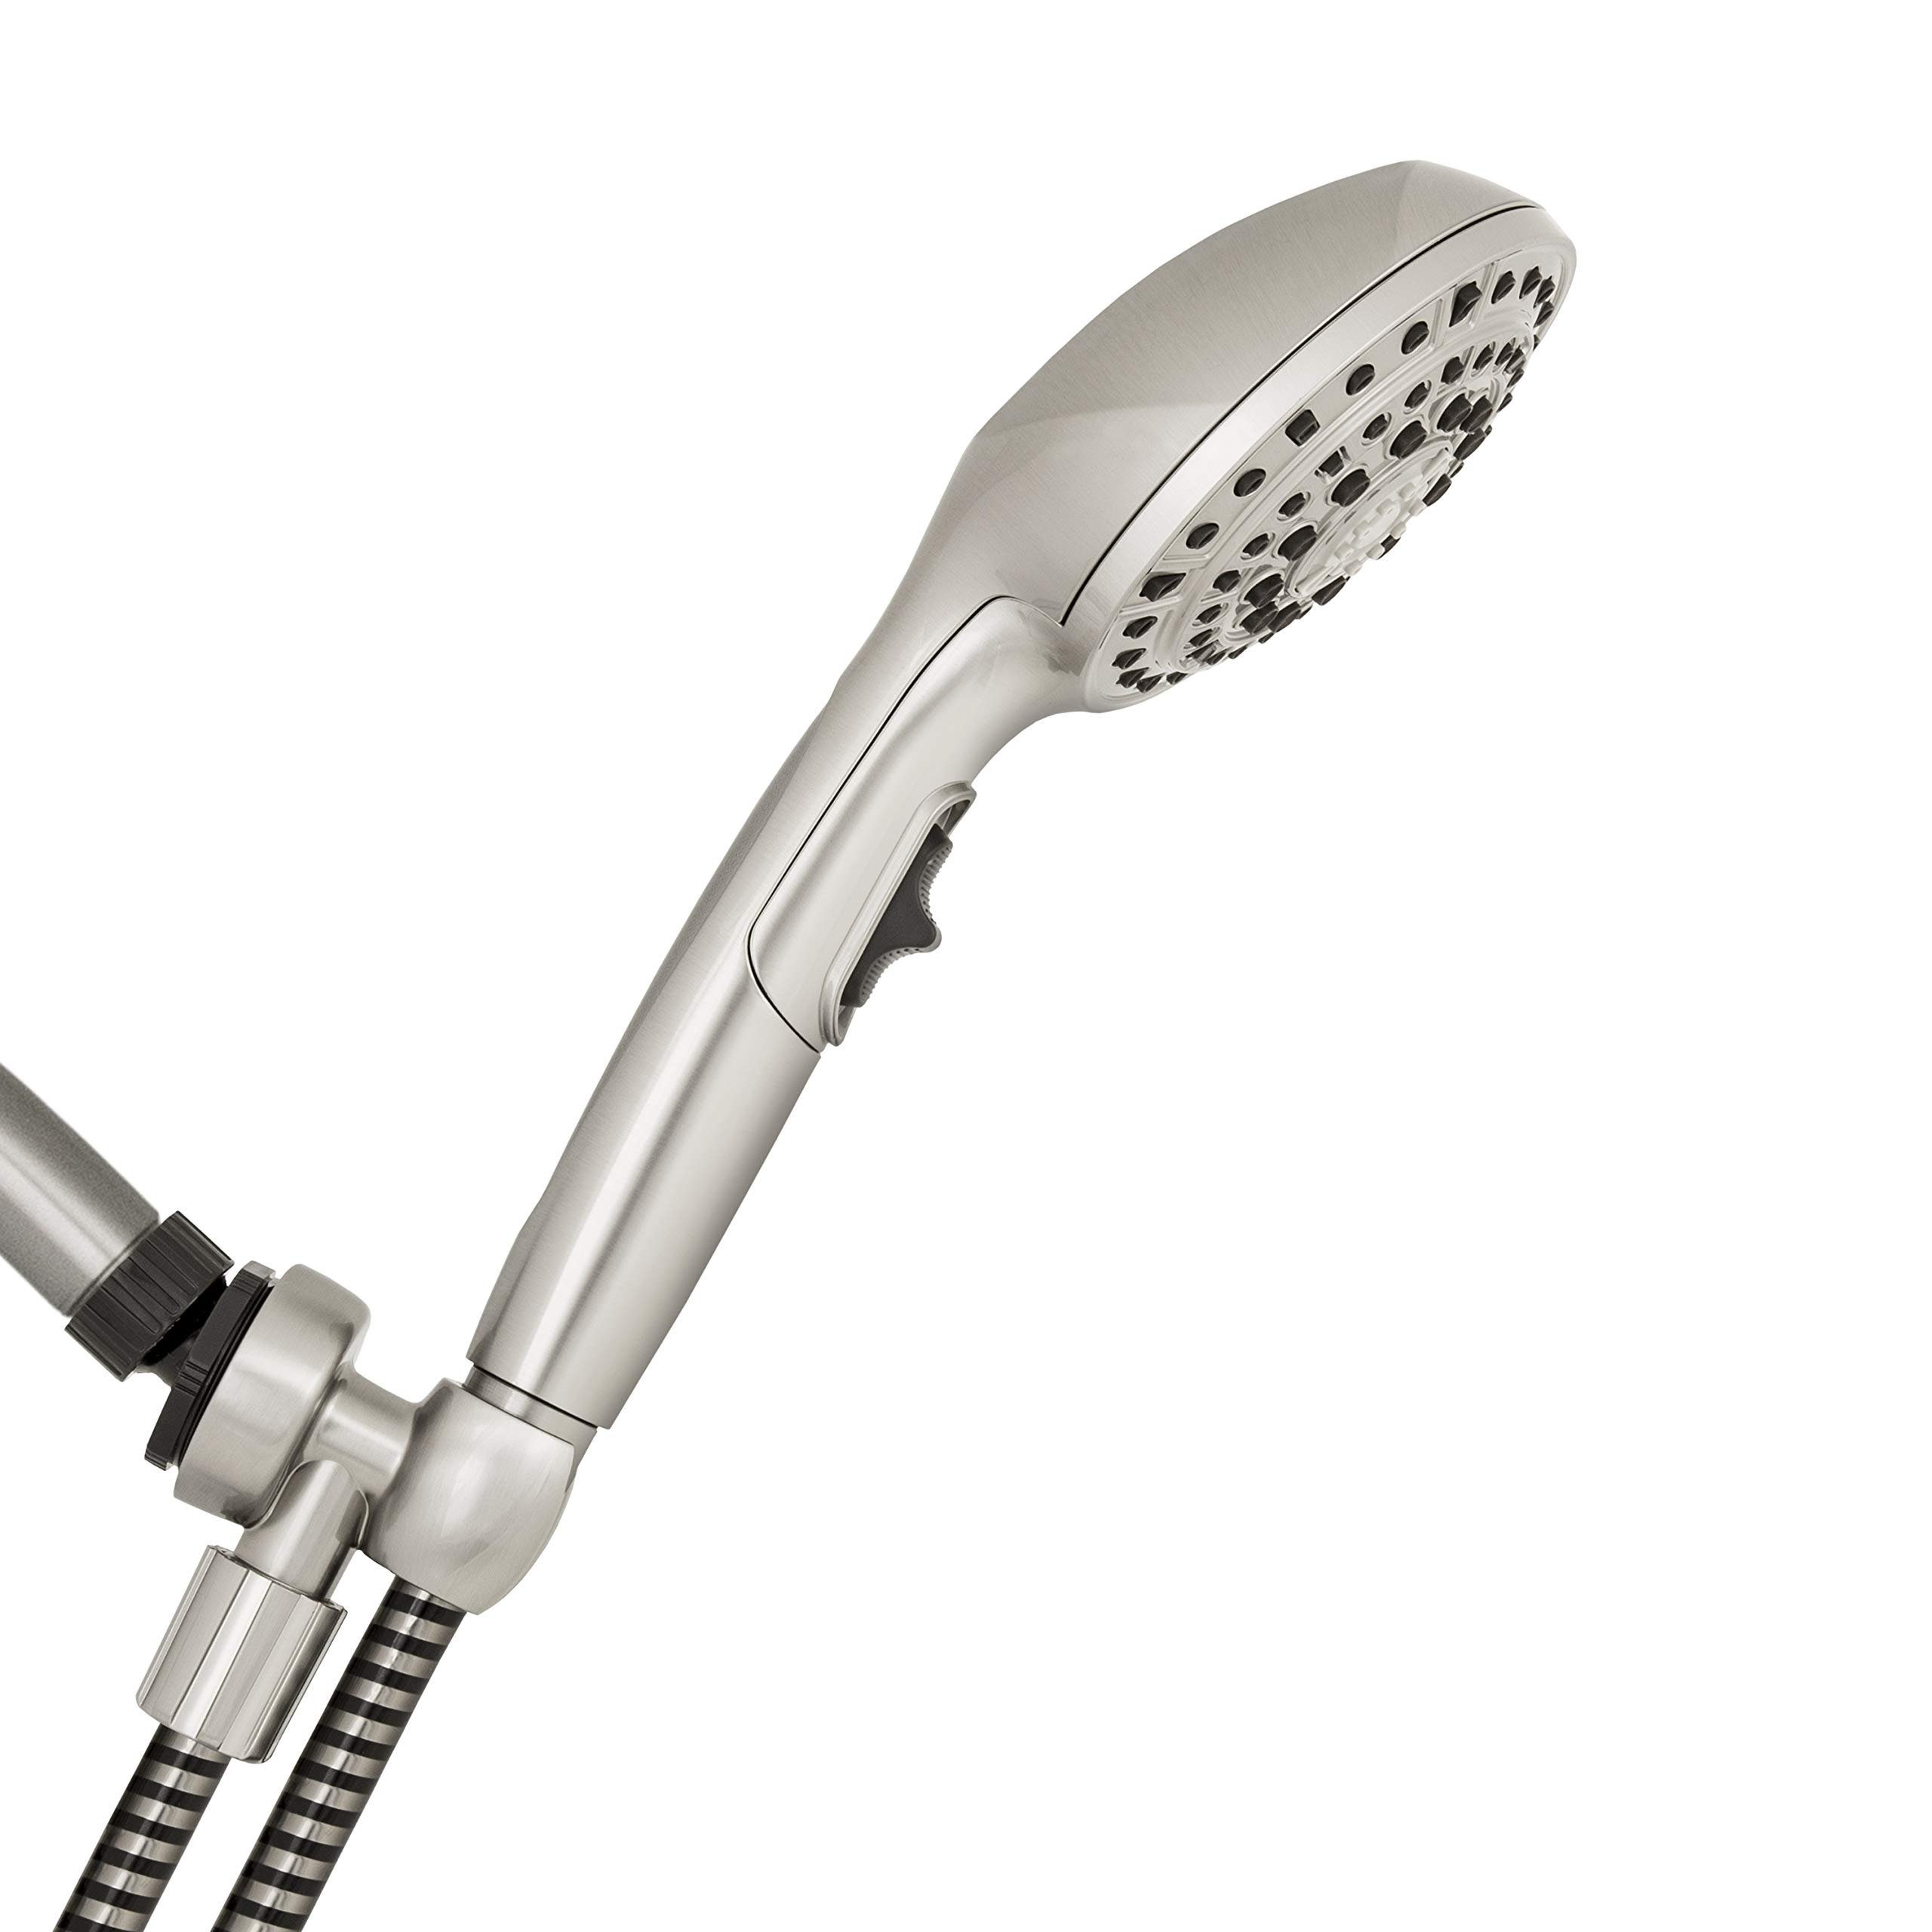 Waterpik 7-Mode PowerPulse Massage Hand Held Brushed Nickel Shower Head with EasySelect. VOT-669E?